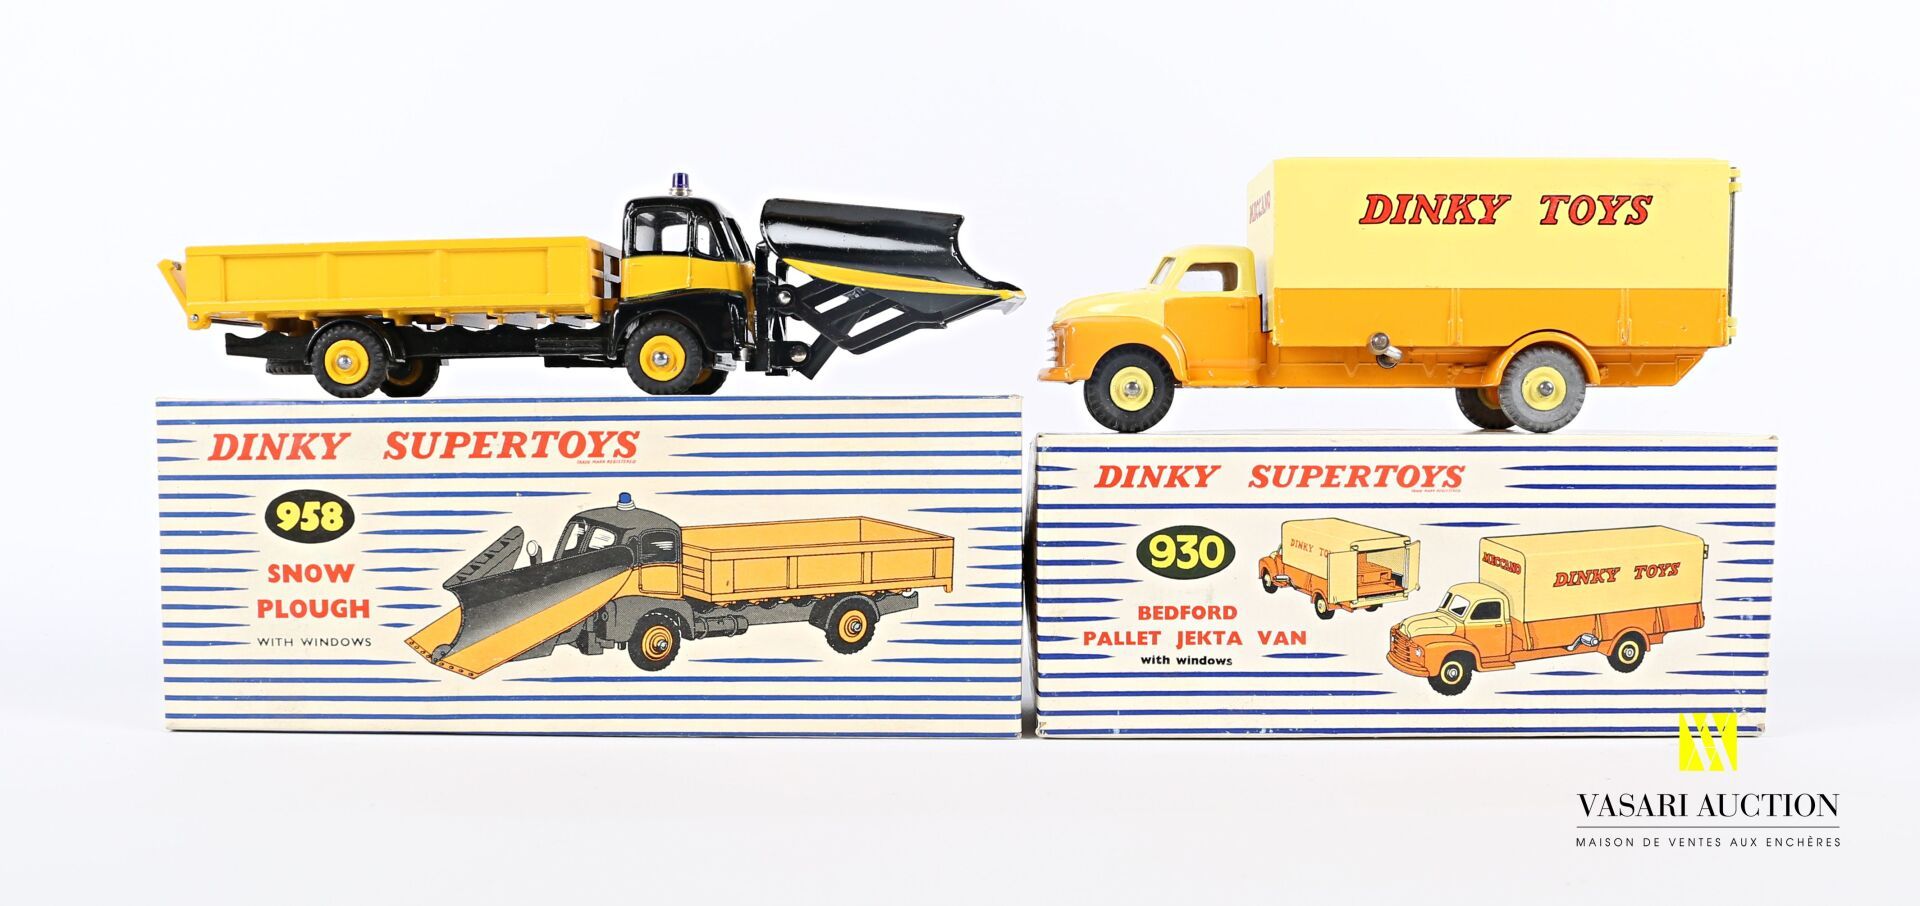 Null Dinky supertoys (GB Meccano)

扫雪机958

贝德福德卡车 "Dinky Toys" 930

(原有的包装盒和手册 -&hellip;